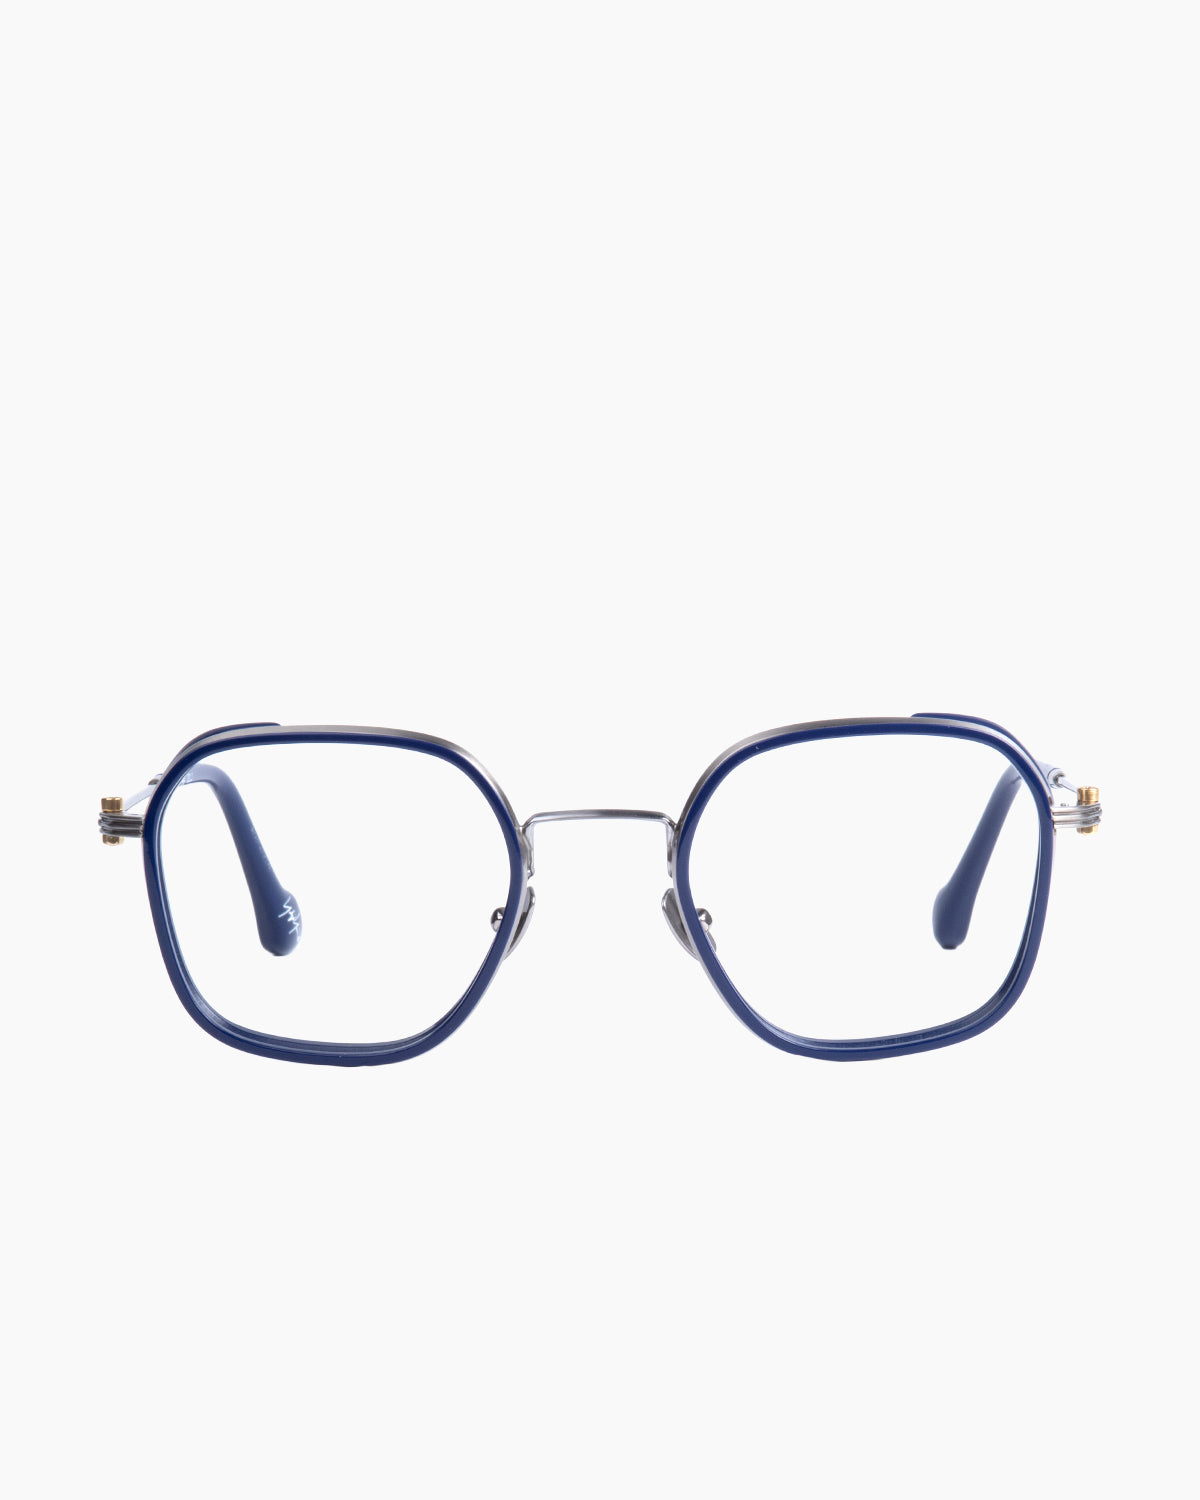 Yohji Yamamoto - Look004 - 004 | Bar à lunettes:  Marie-Sophie Dion